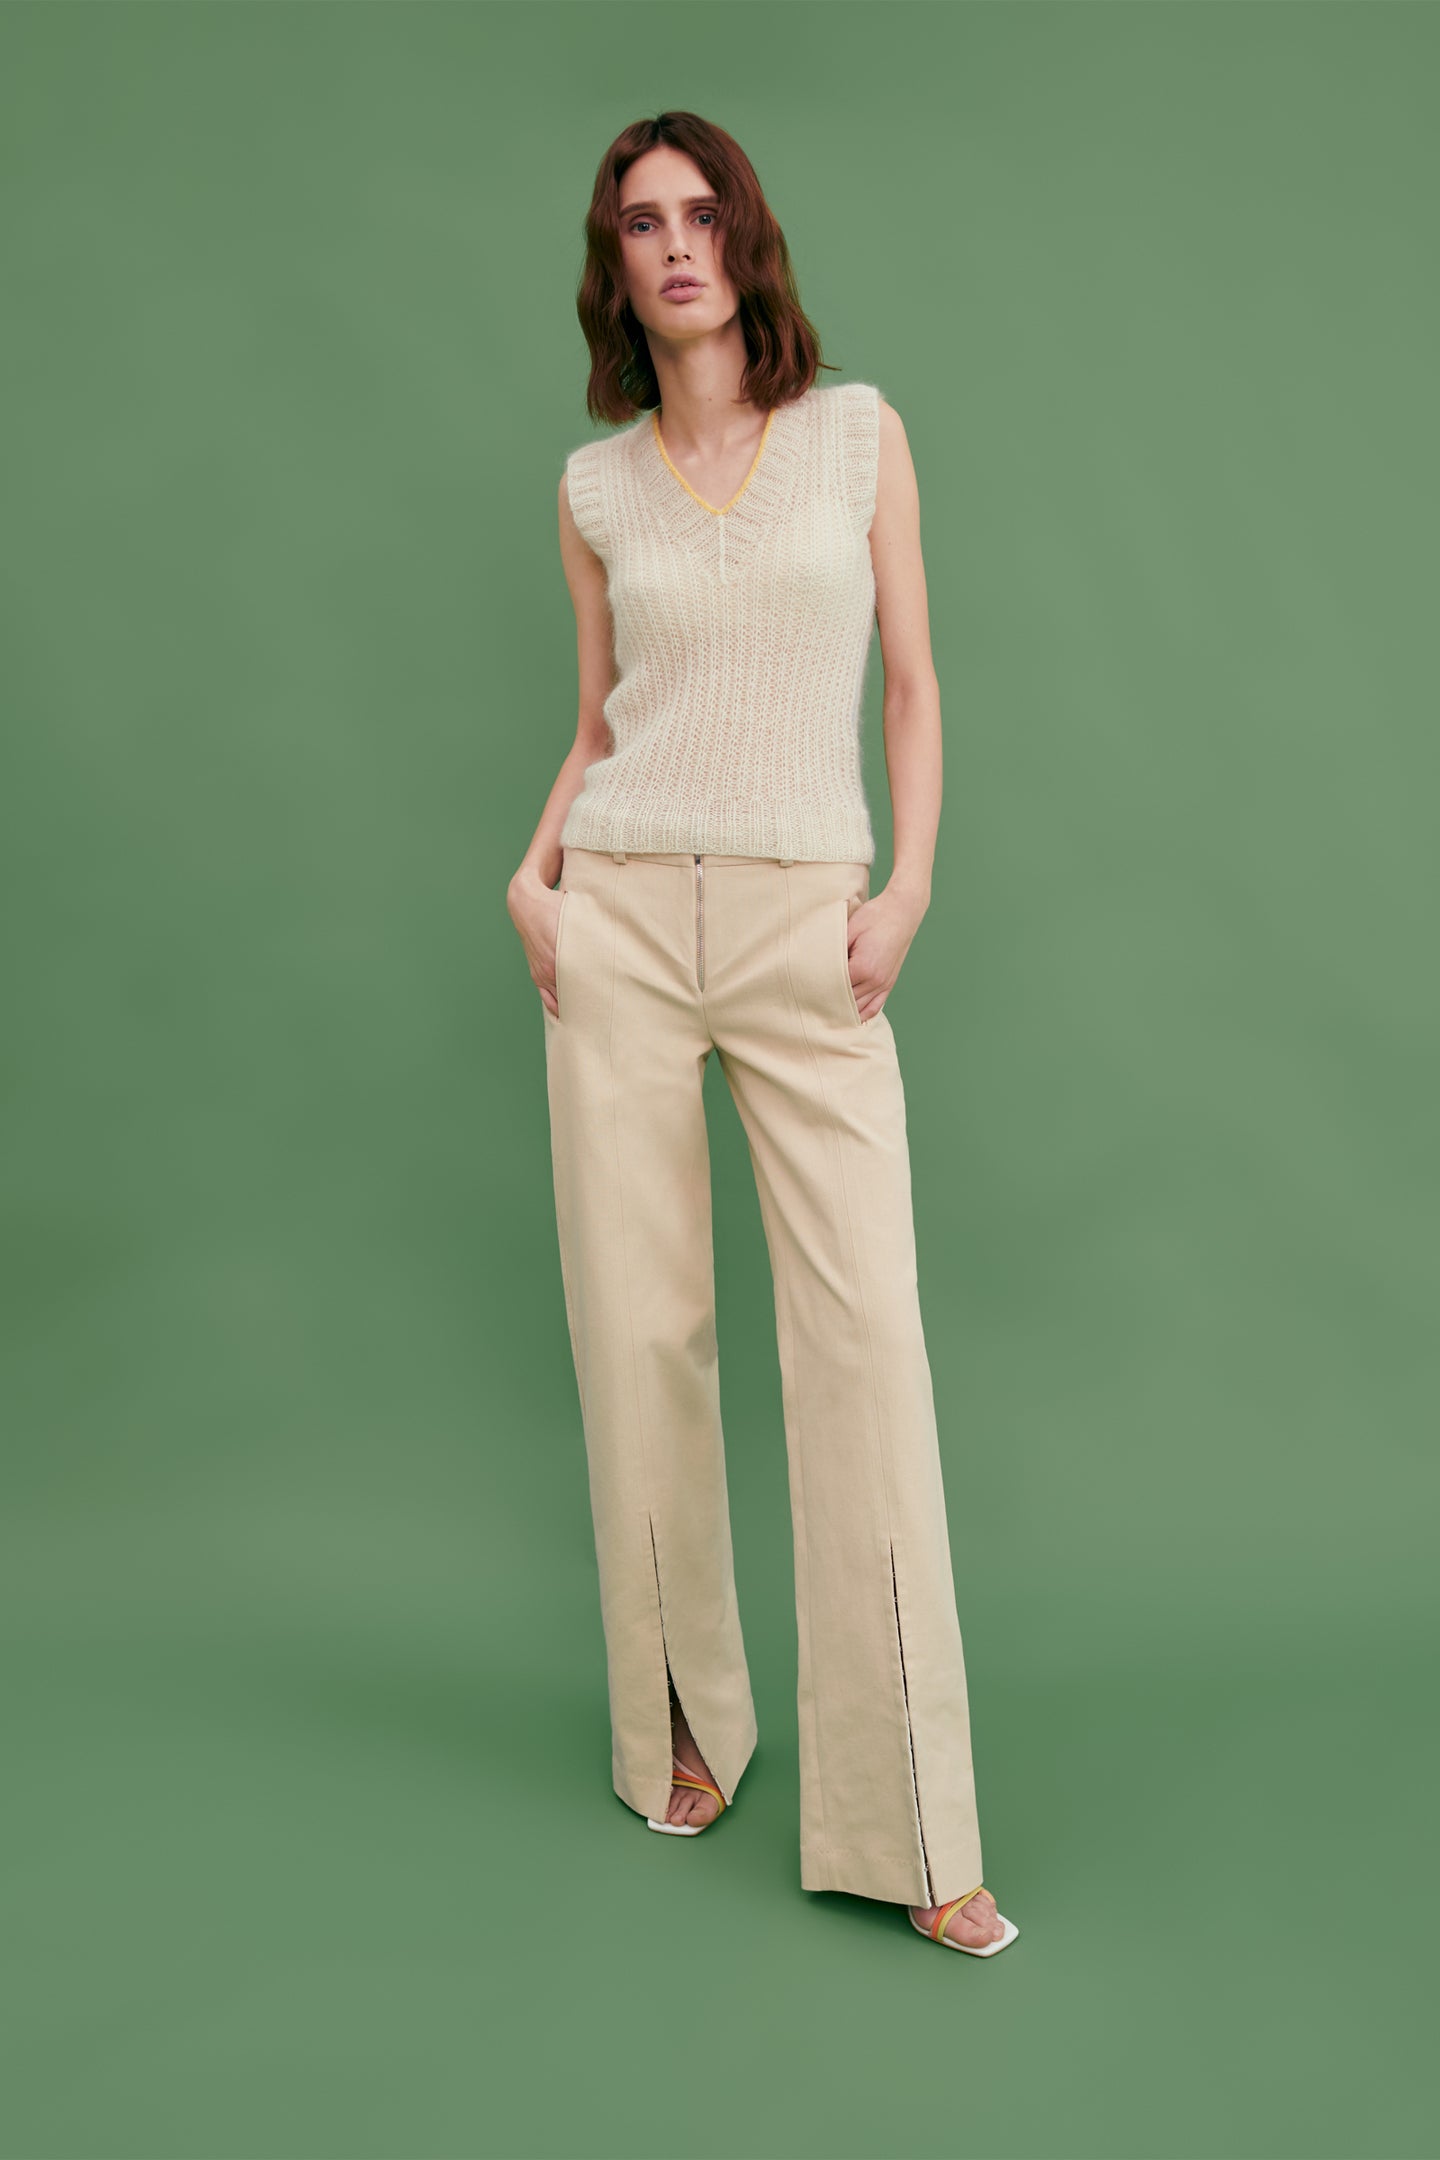 Model in cream Stefani pants